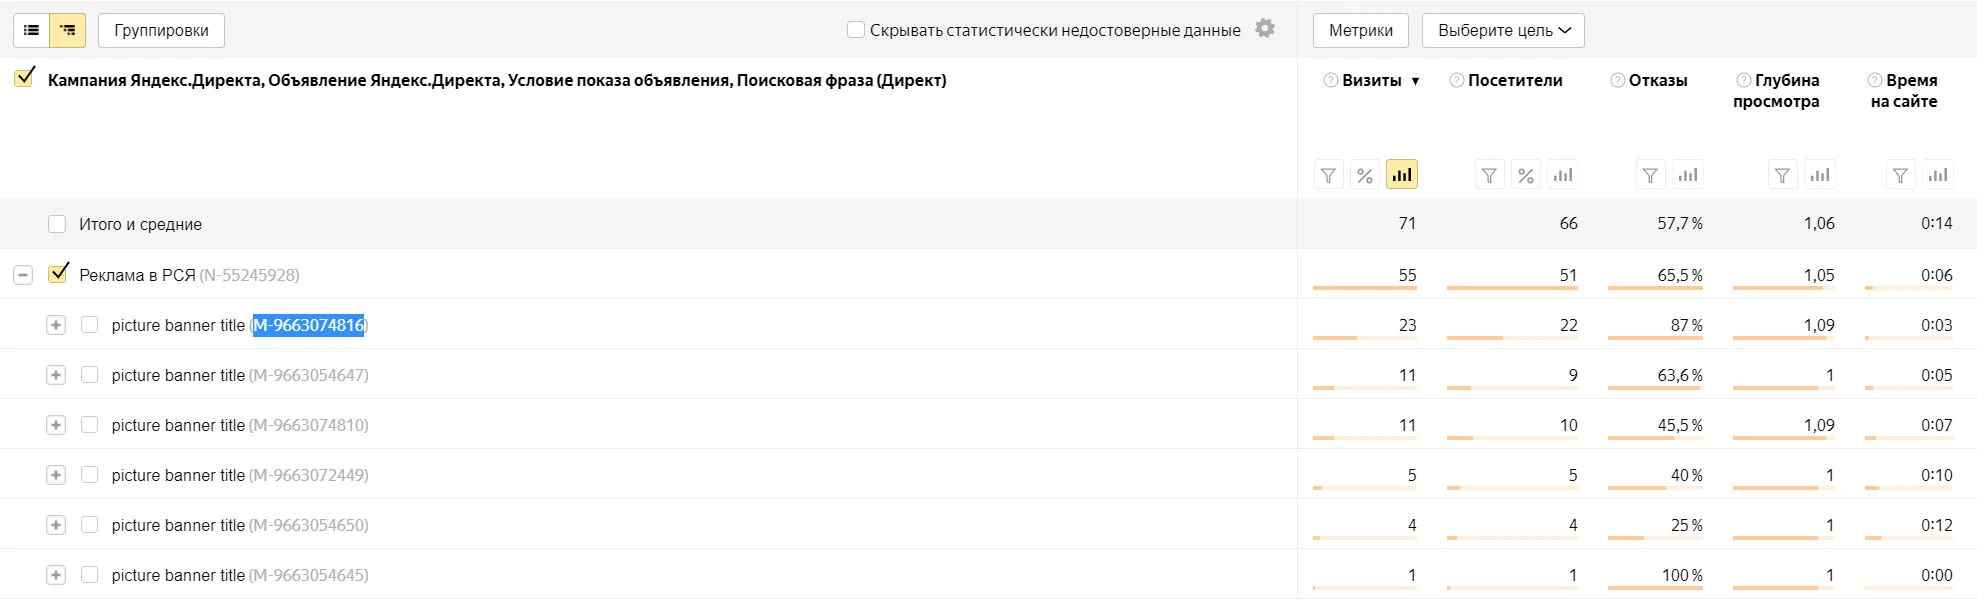 Яндекс.Директ - статистика в метрике